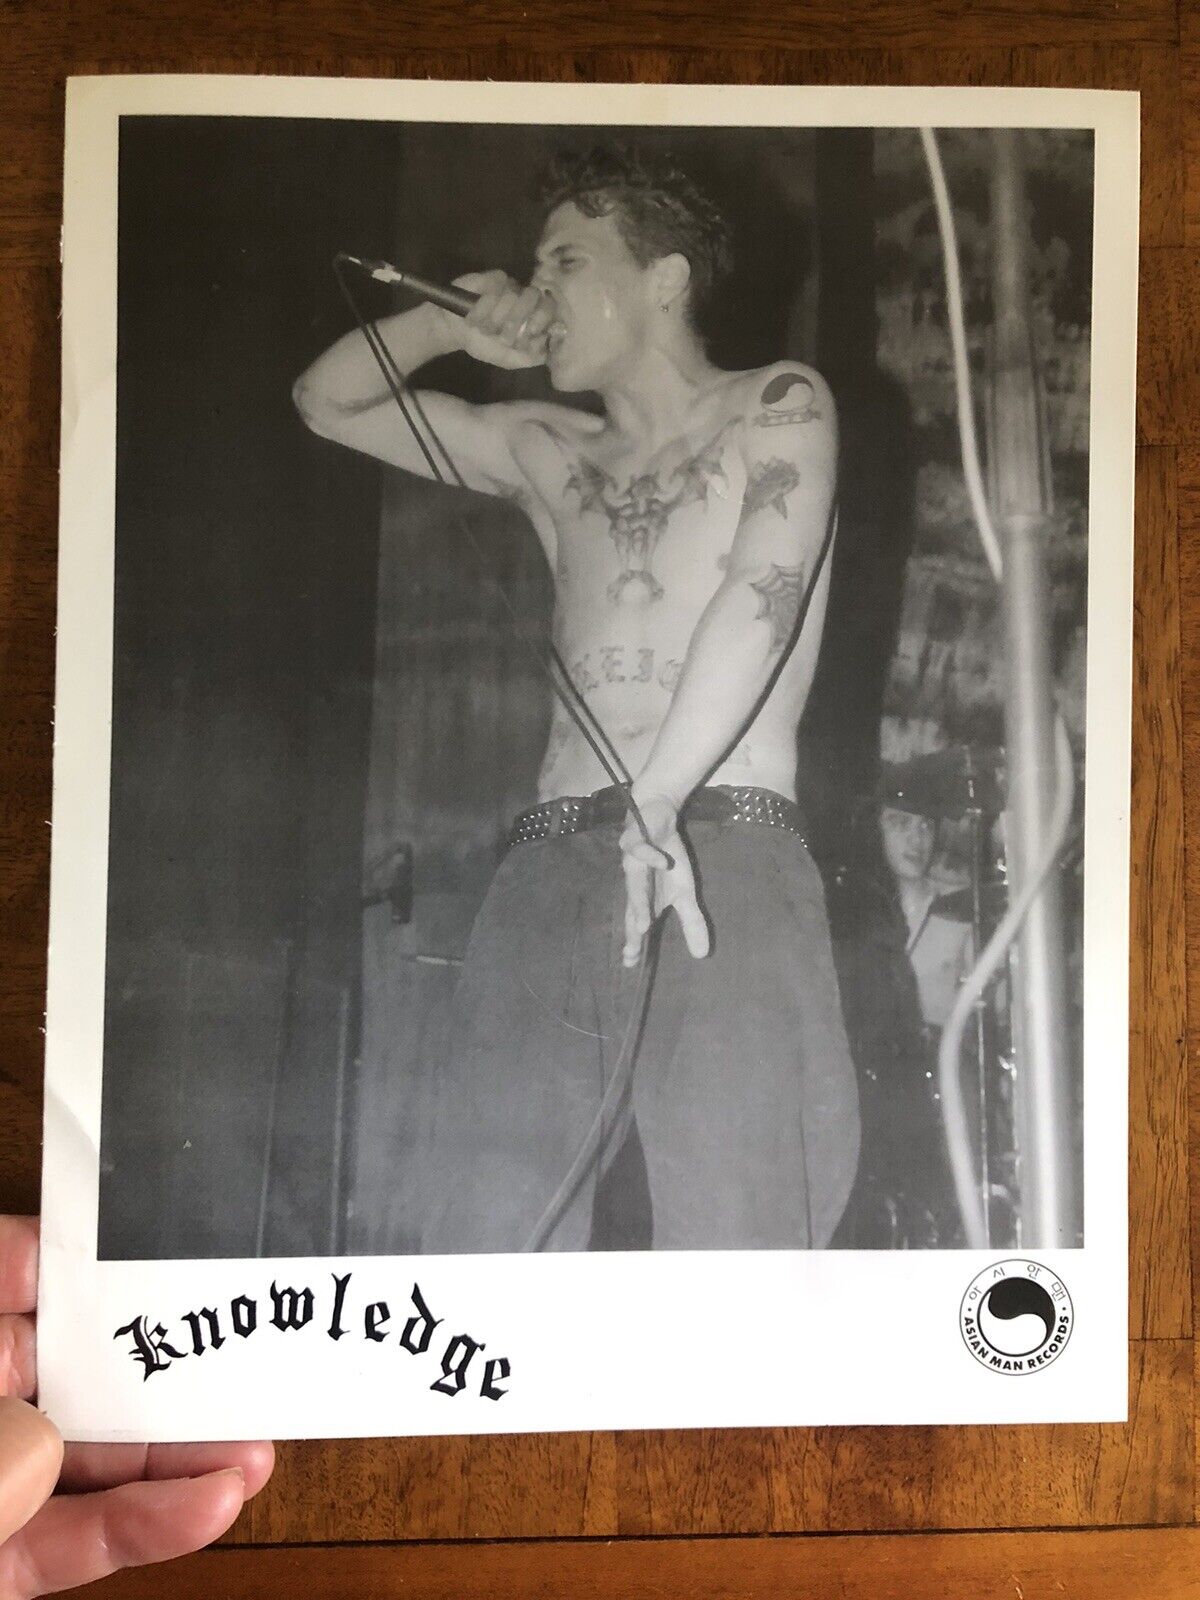 Knowledge Punk Rock Music Group Very Rare Vintage 8x10 Press Photo - Nick Traina